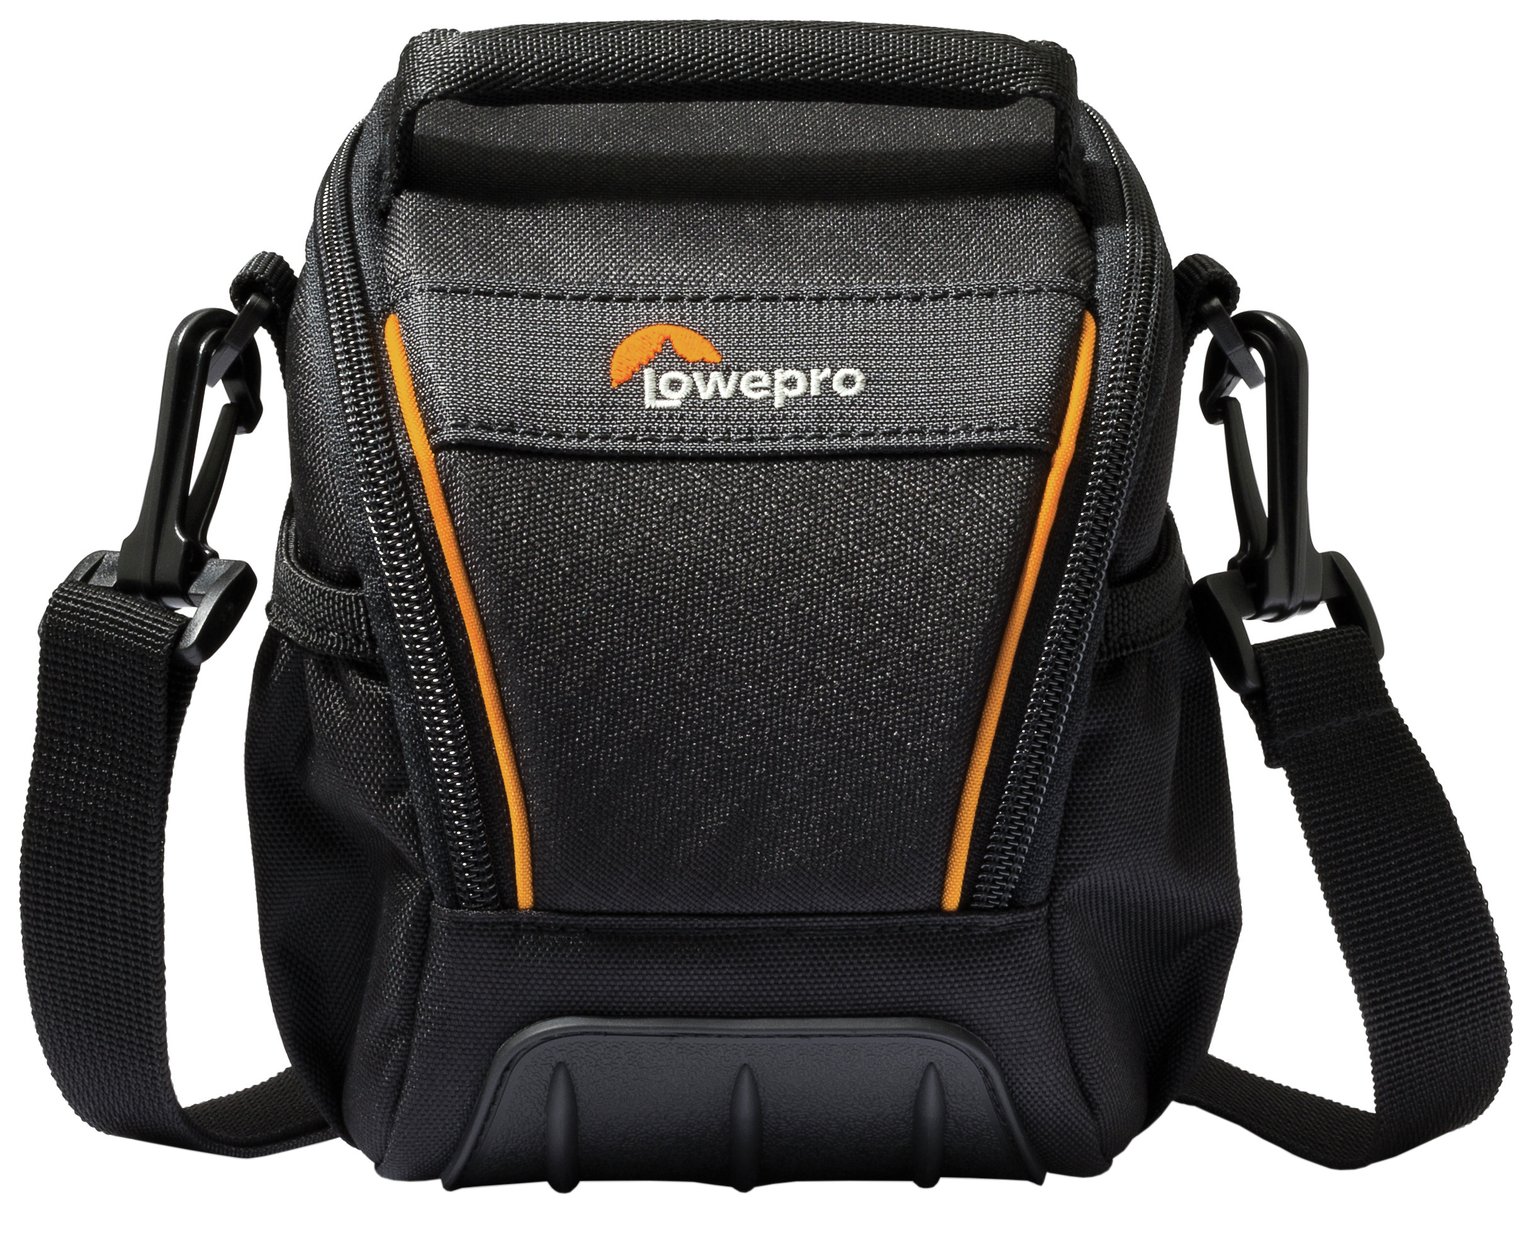 Lowepro Adventura SH100 LL Compact System Camera Bag review